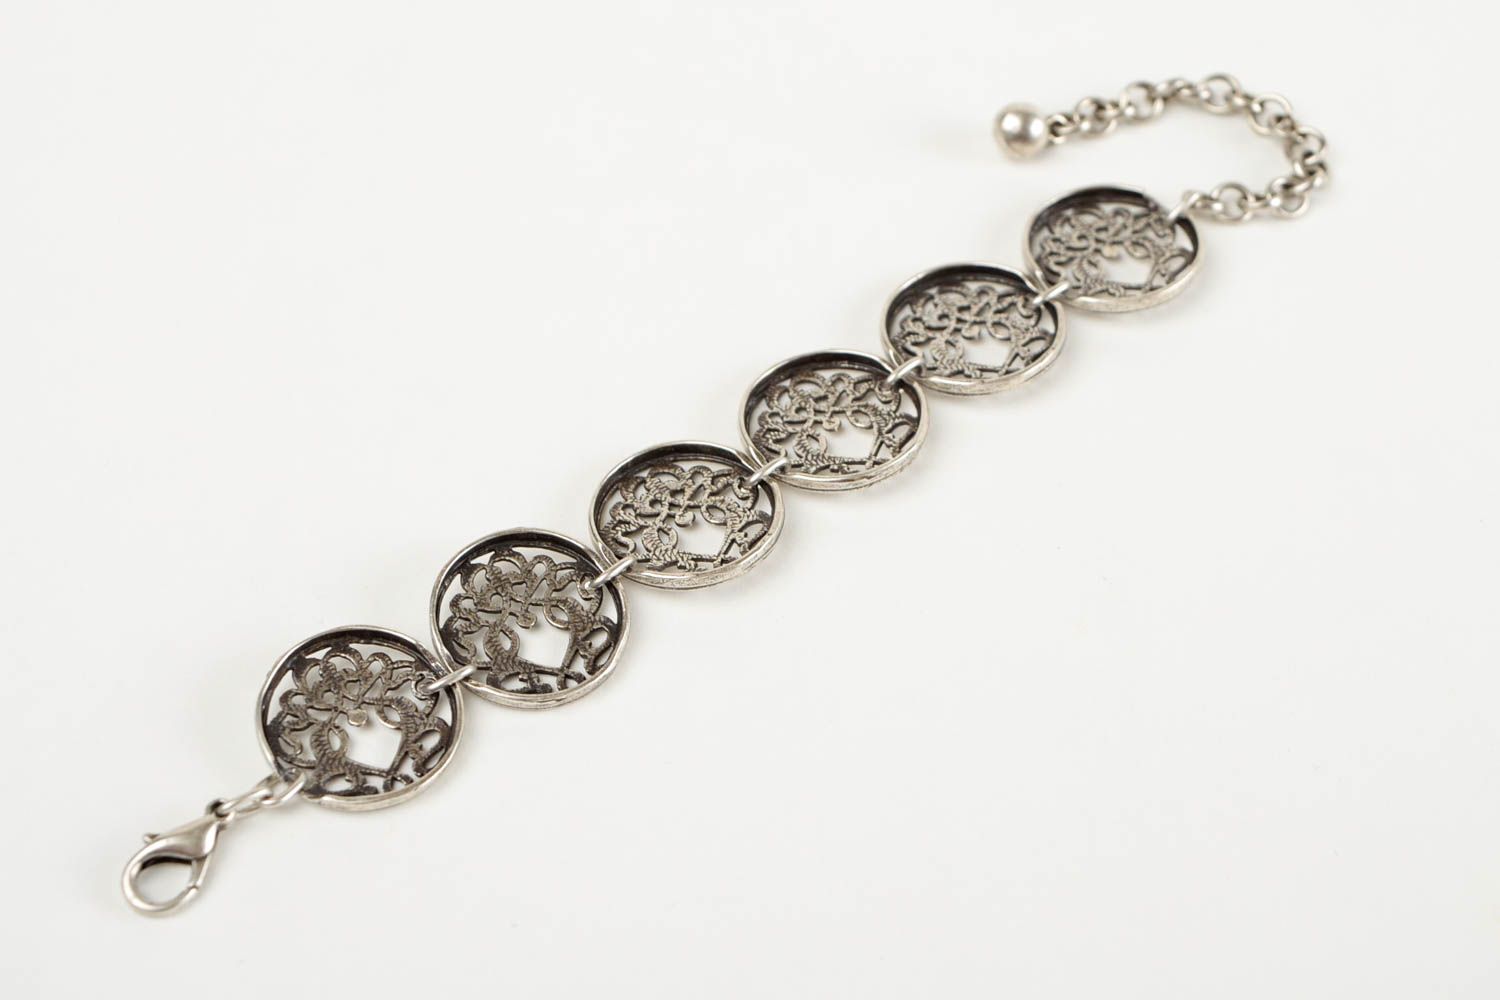 Beautiful handmade metal bracelet designs artisan jewelry fashion trends photo 5